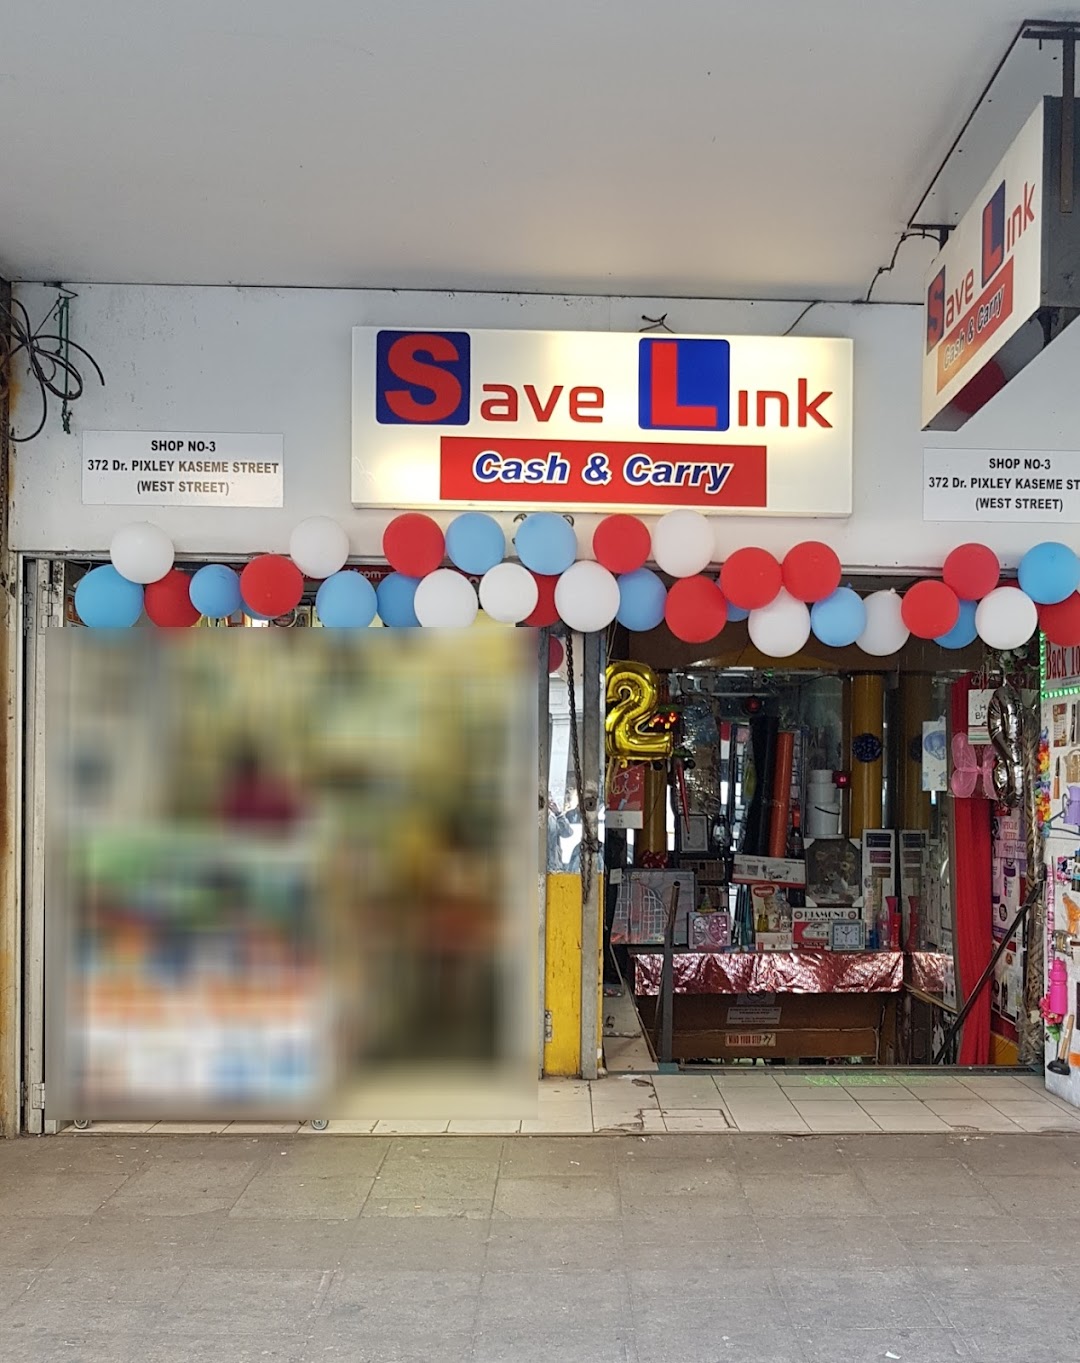 Save Link Cash & Carry,372 Dr Pixley Kaseme(West Street)